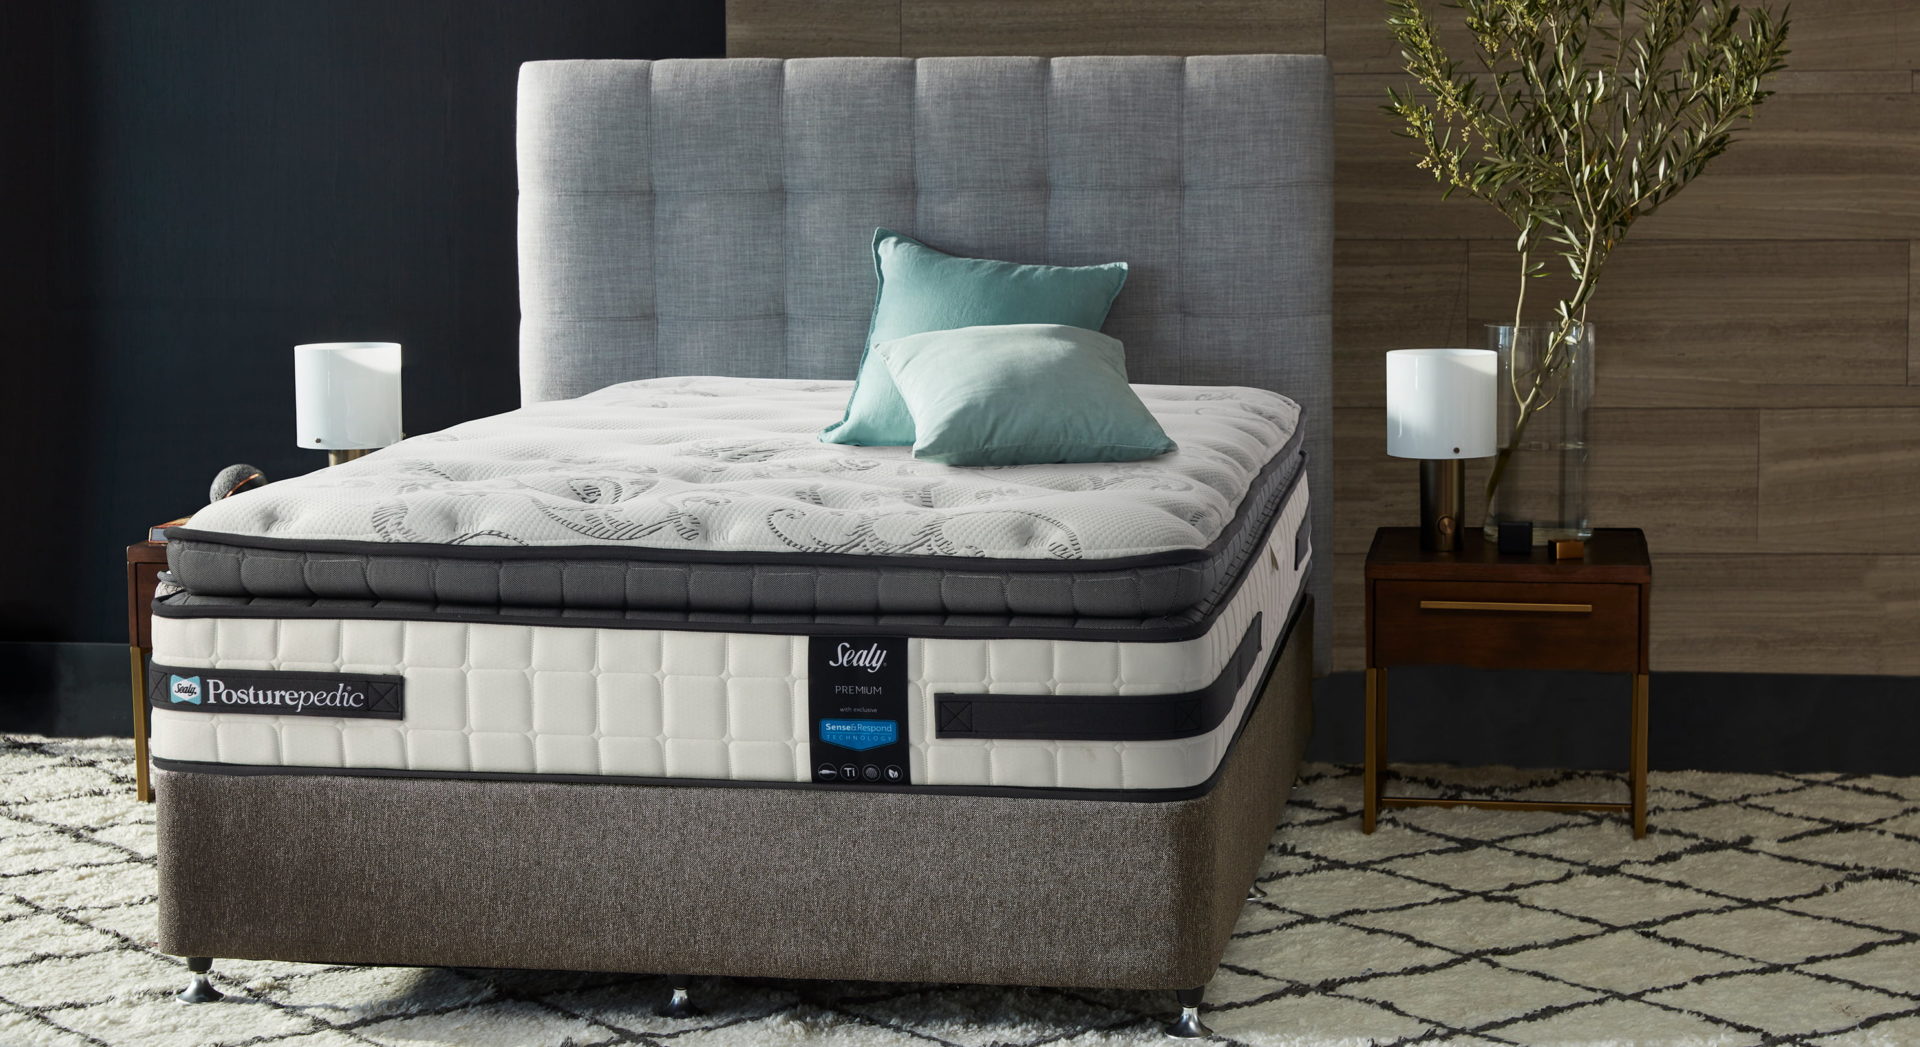 sealy mattress double mattress price